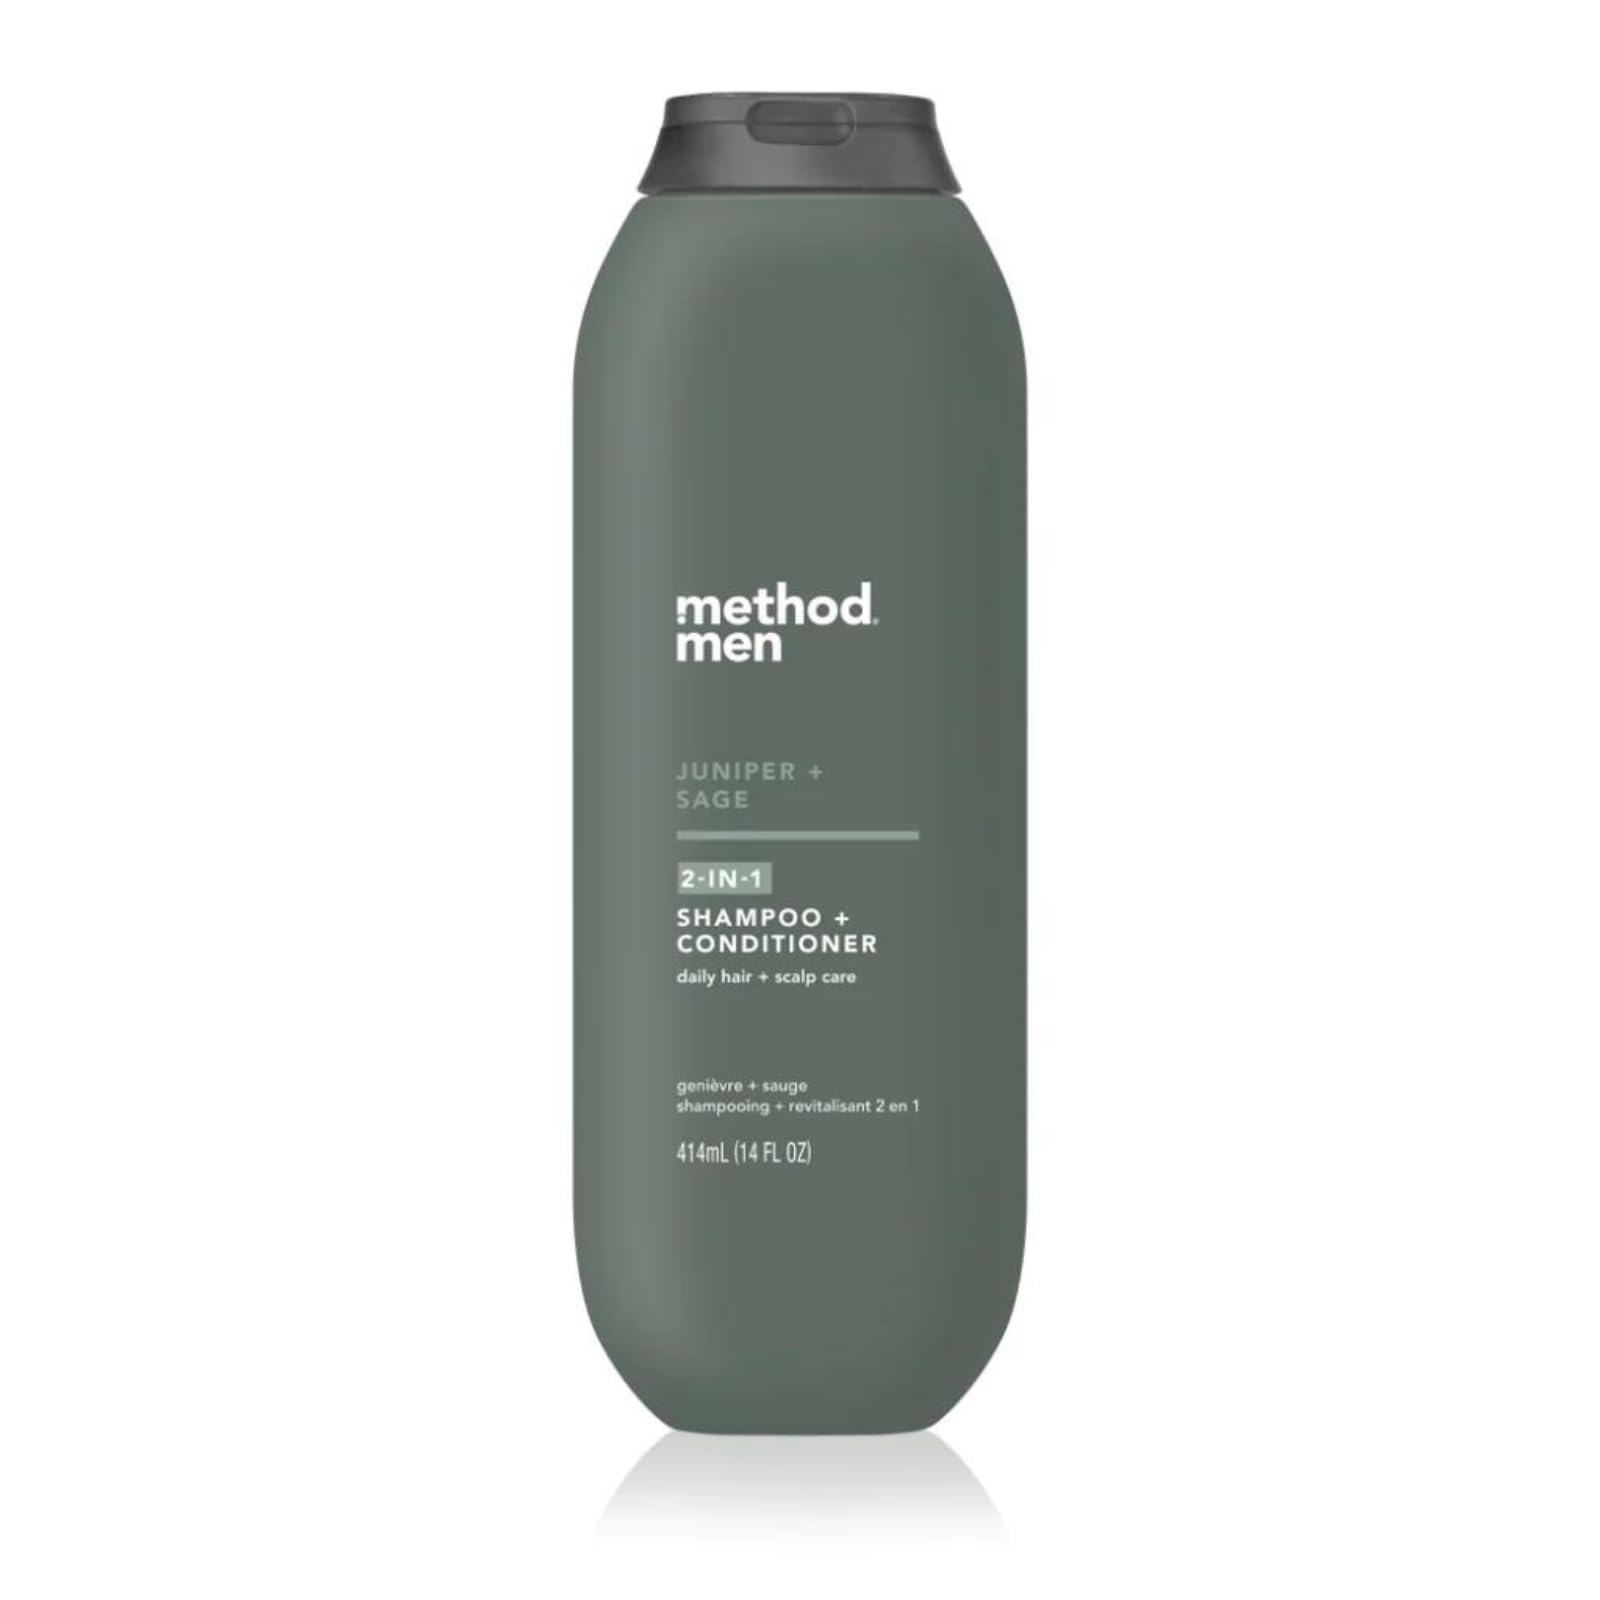 Method Men 2-in-1 Shampoo + Condtioner, Juniper + Sage, 14 Ounces.